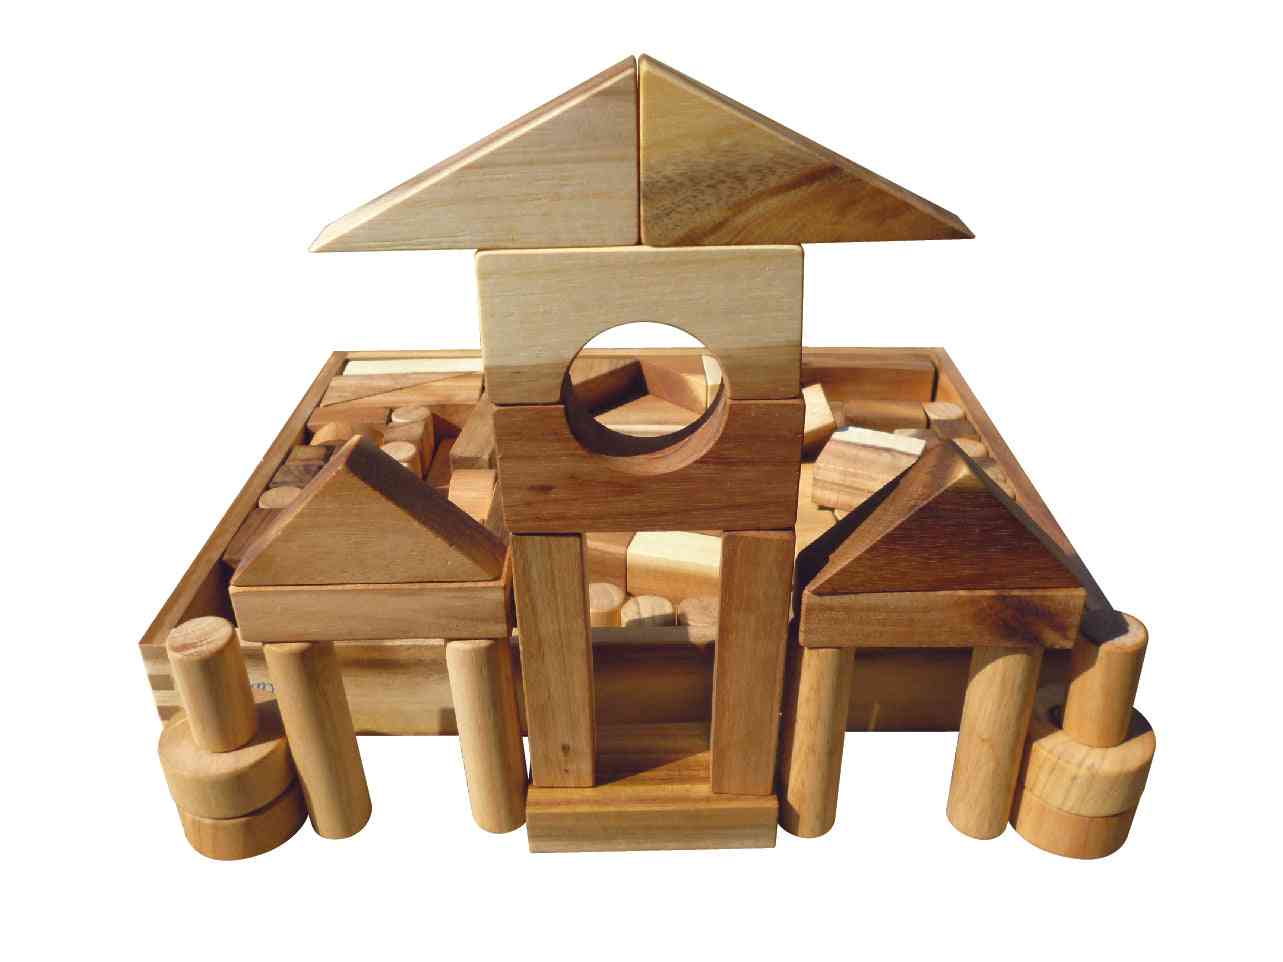 Wooden 117 Pcs Blocks-construction Set